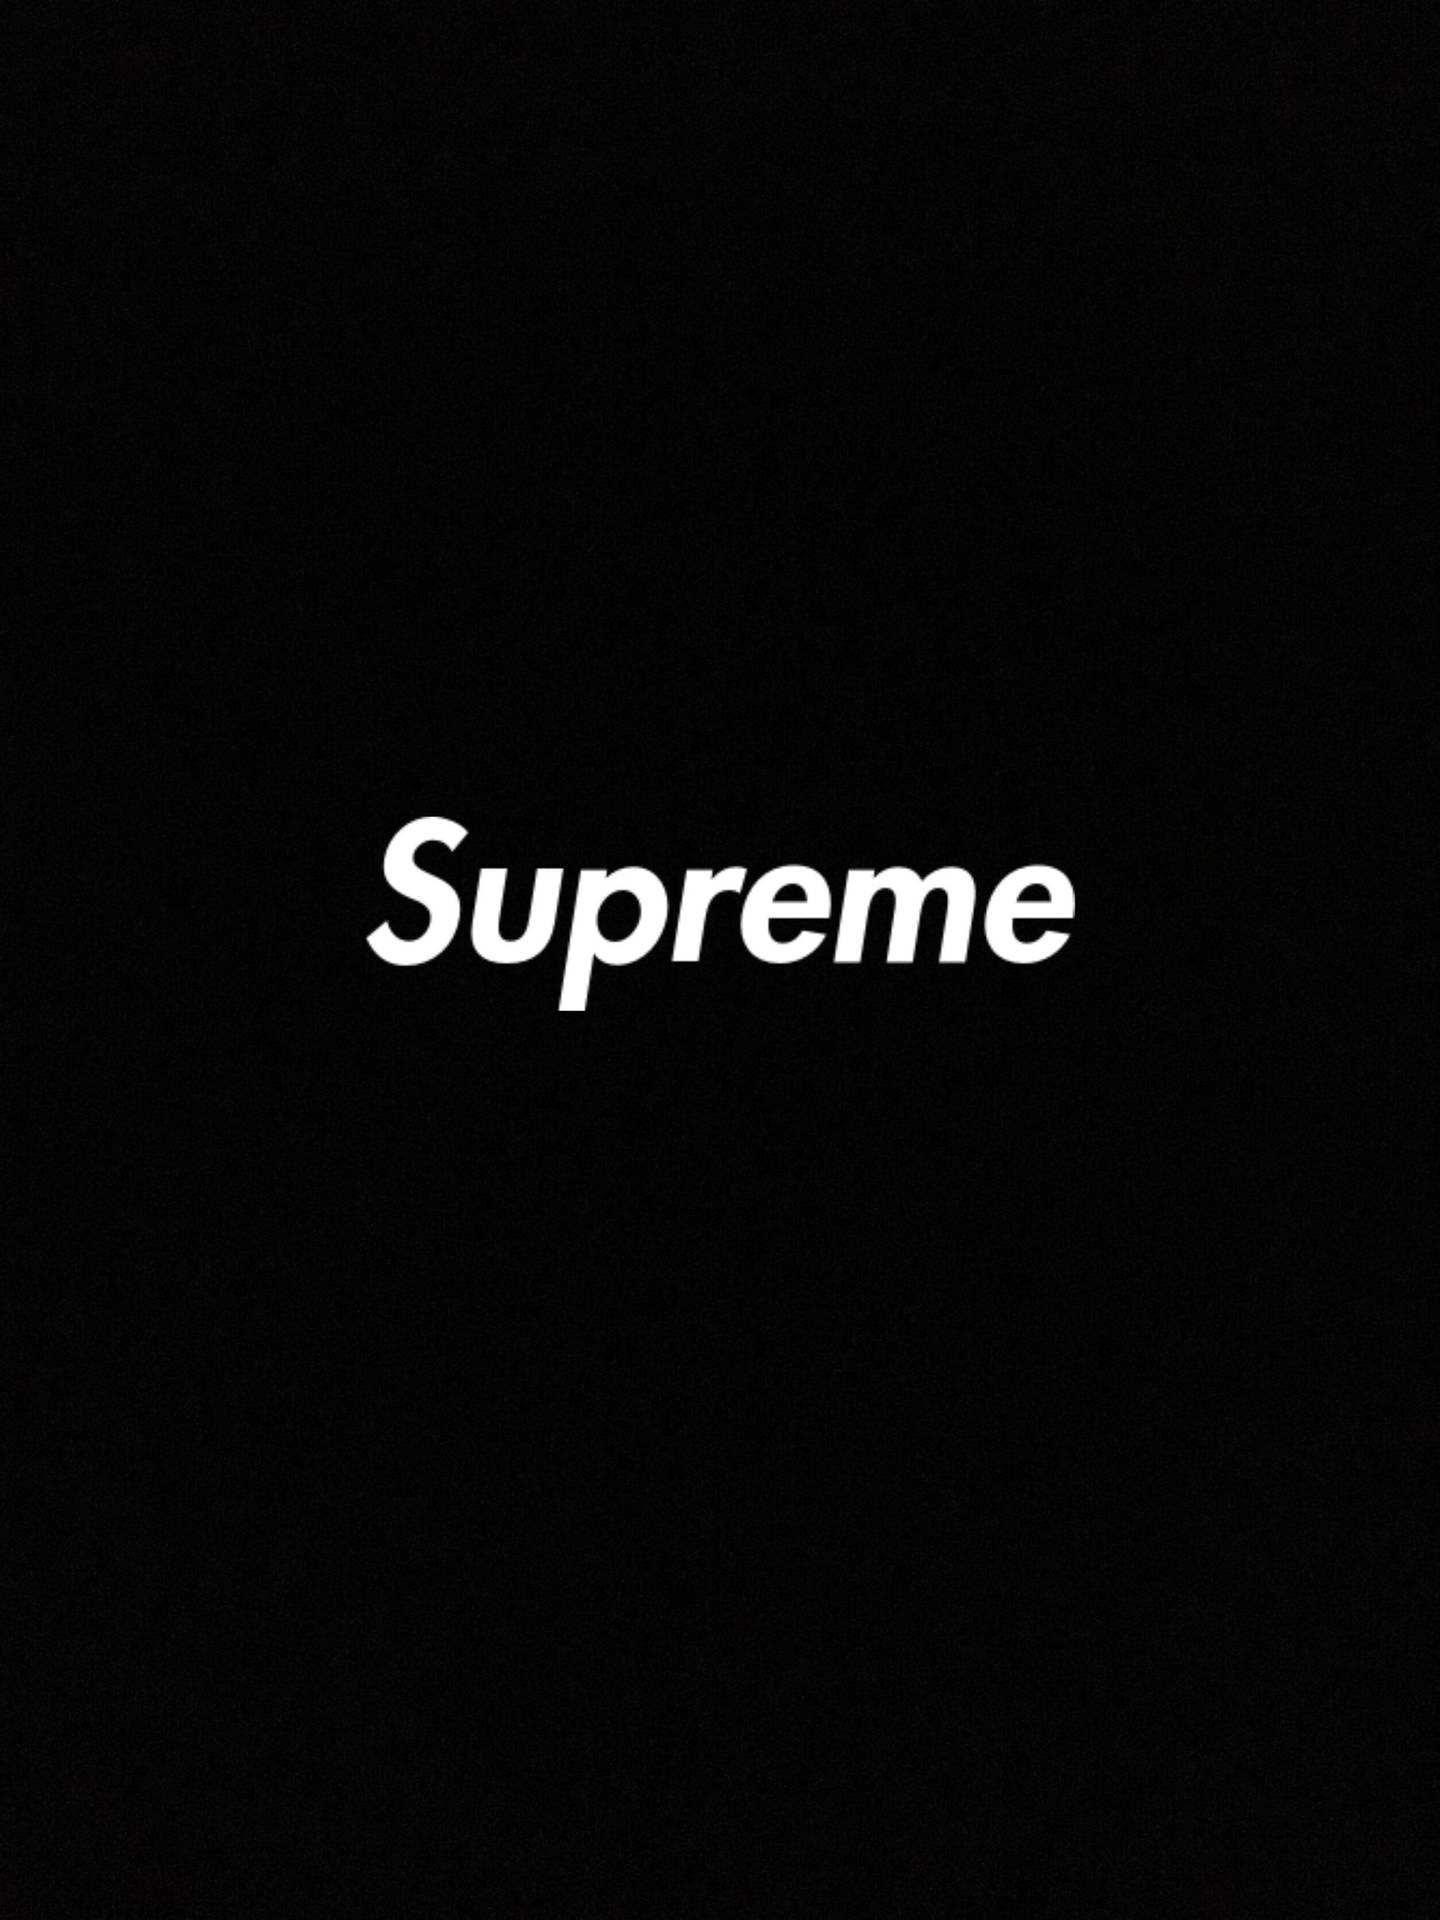 Supreme Logo Cool Black Background